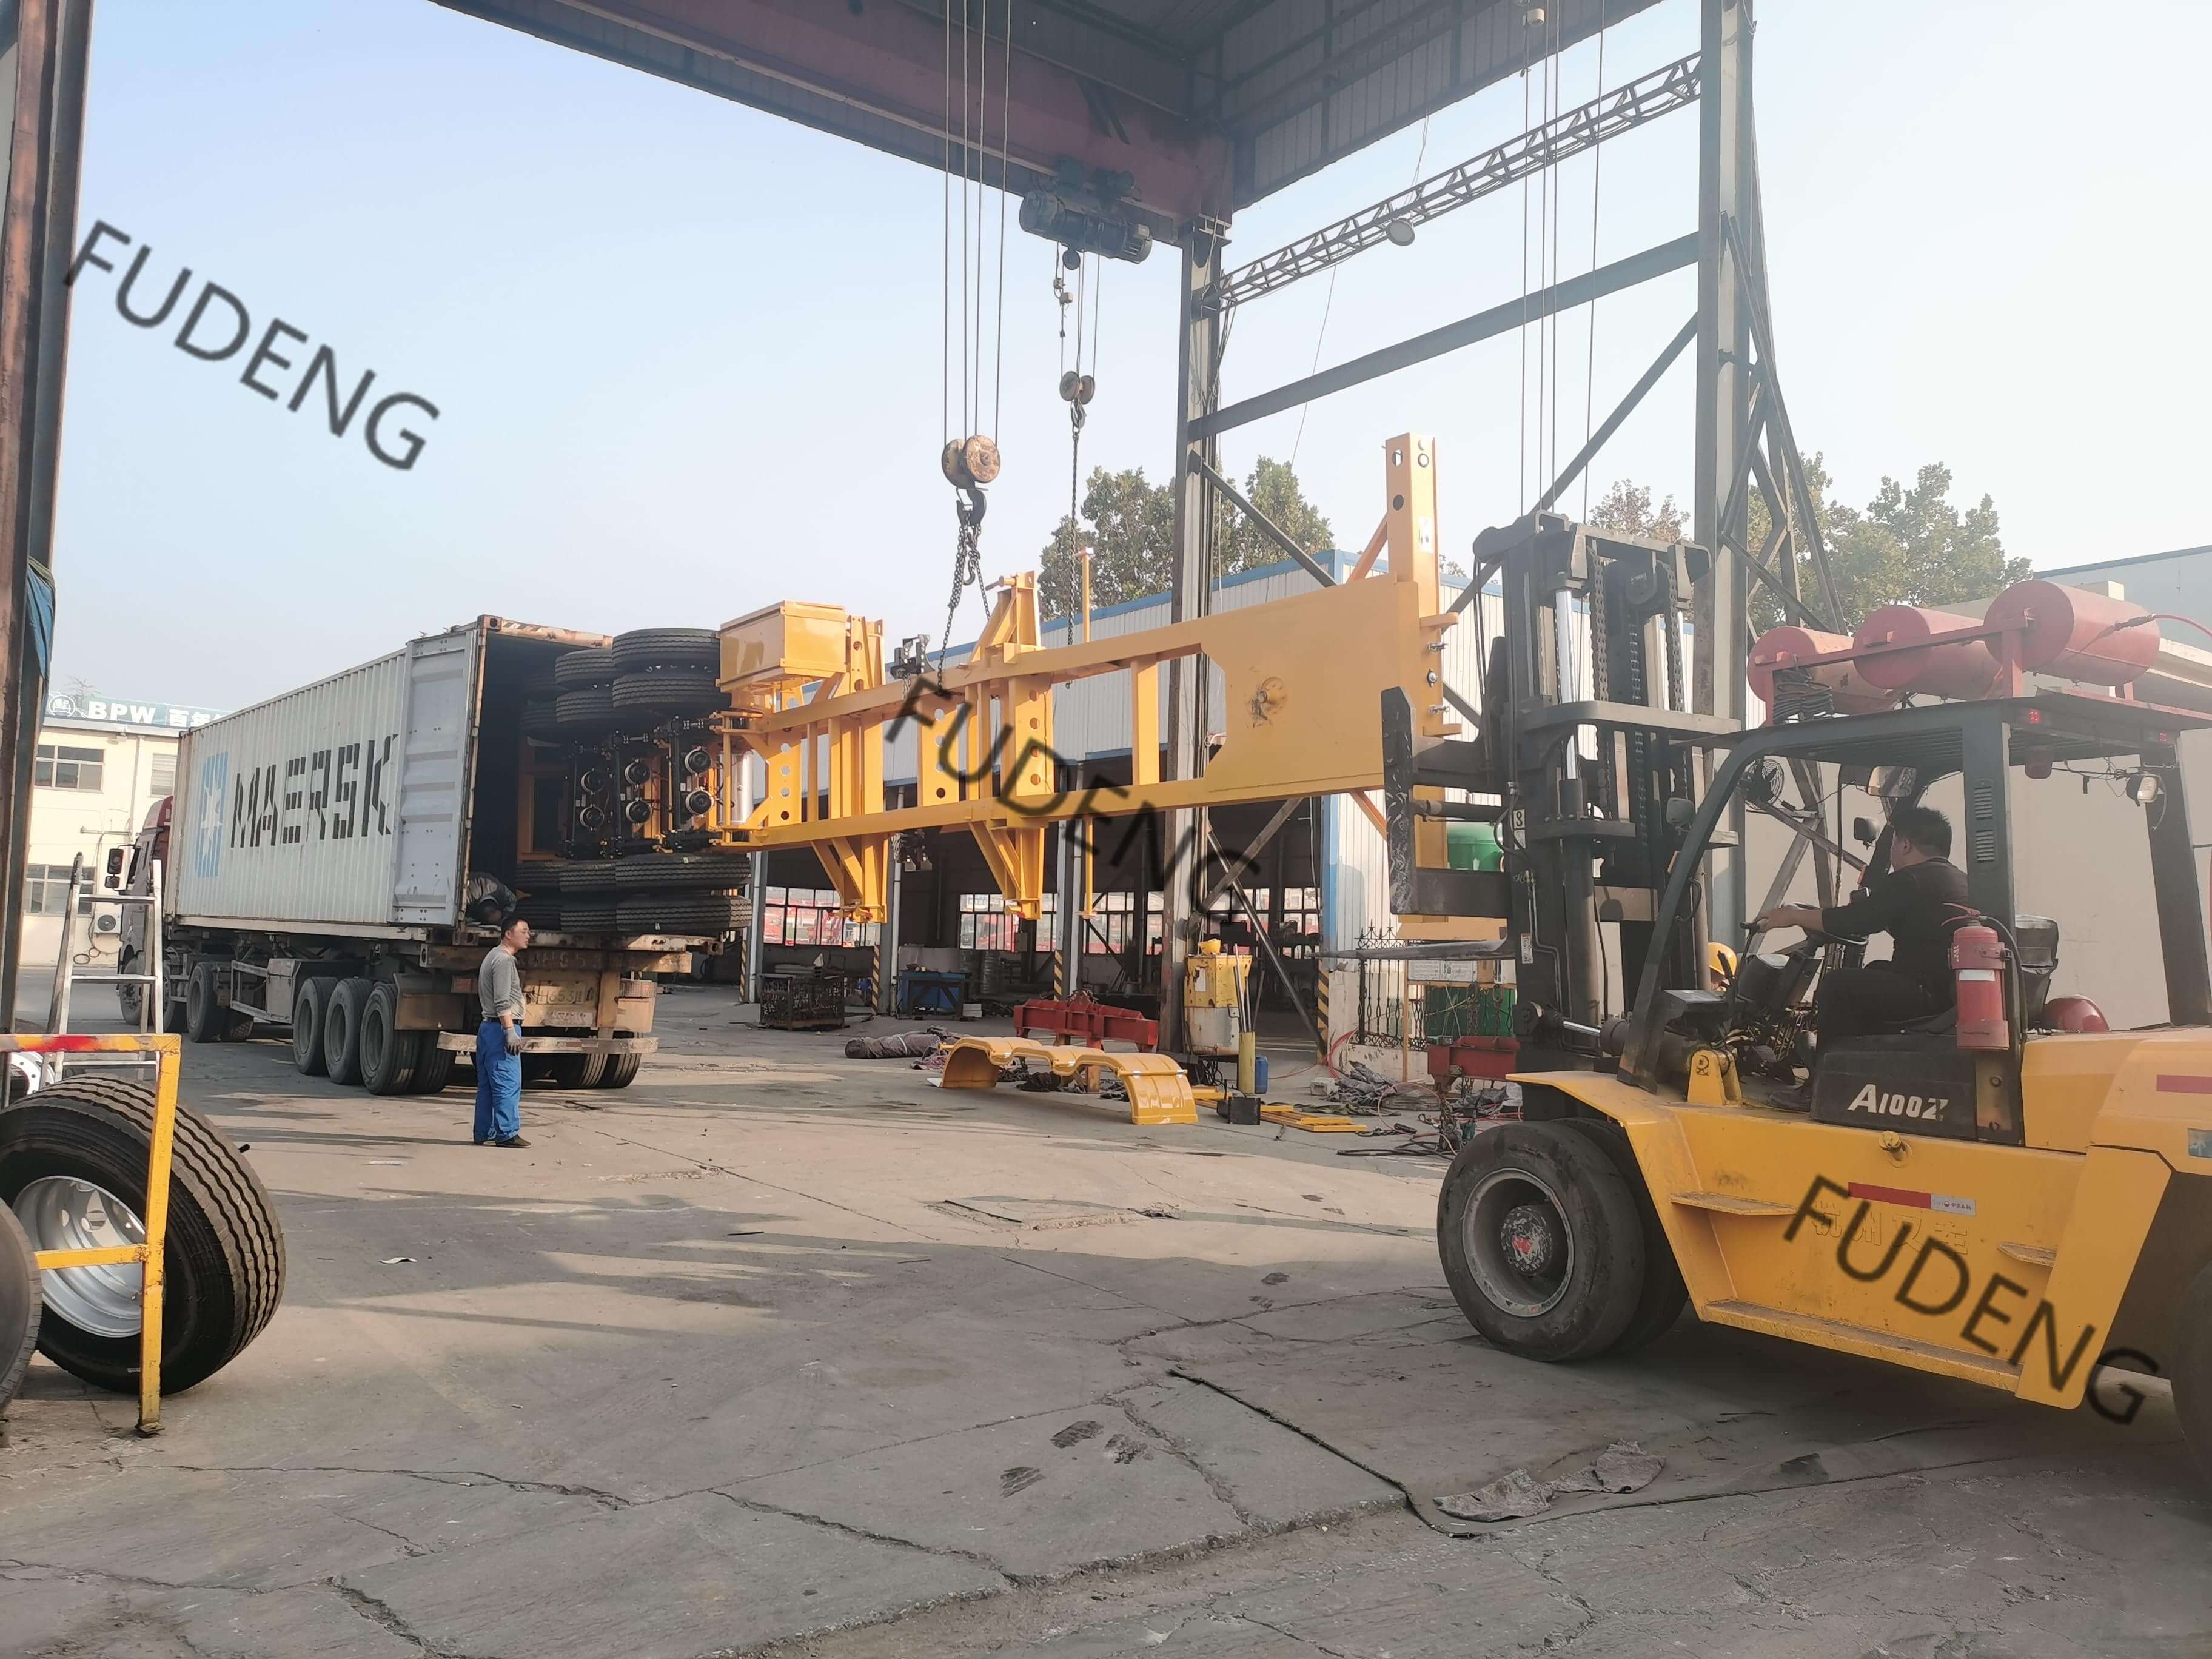 Fudeng skeleton trailer is ready to arrange sea shipping